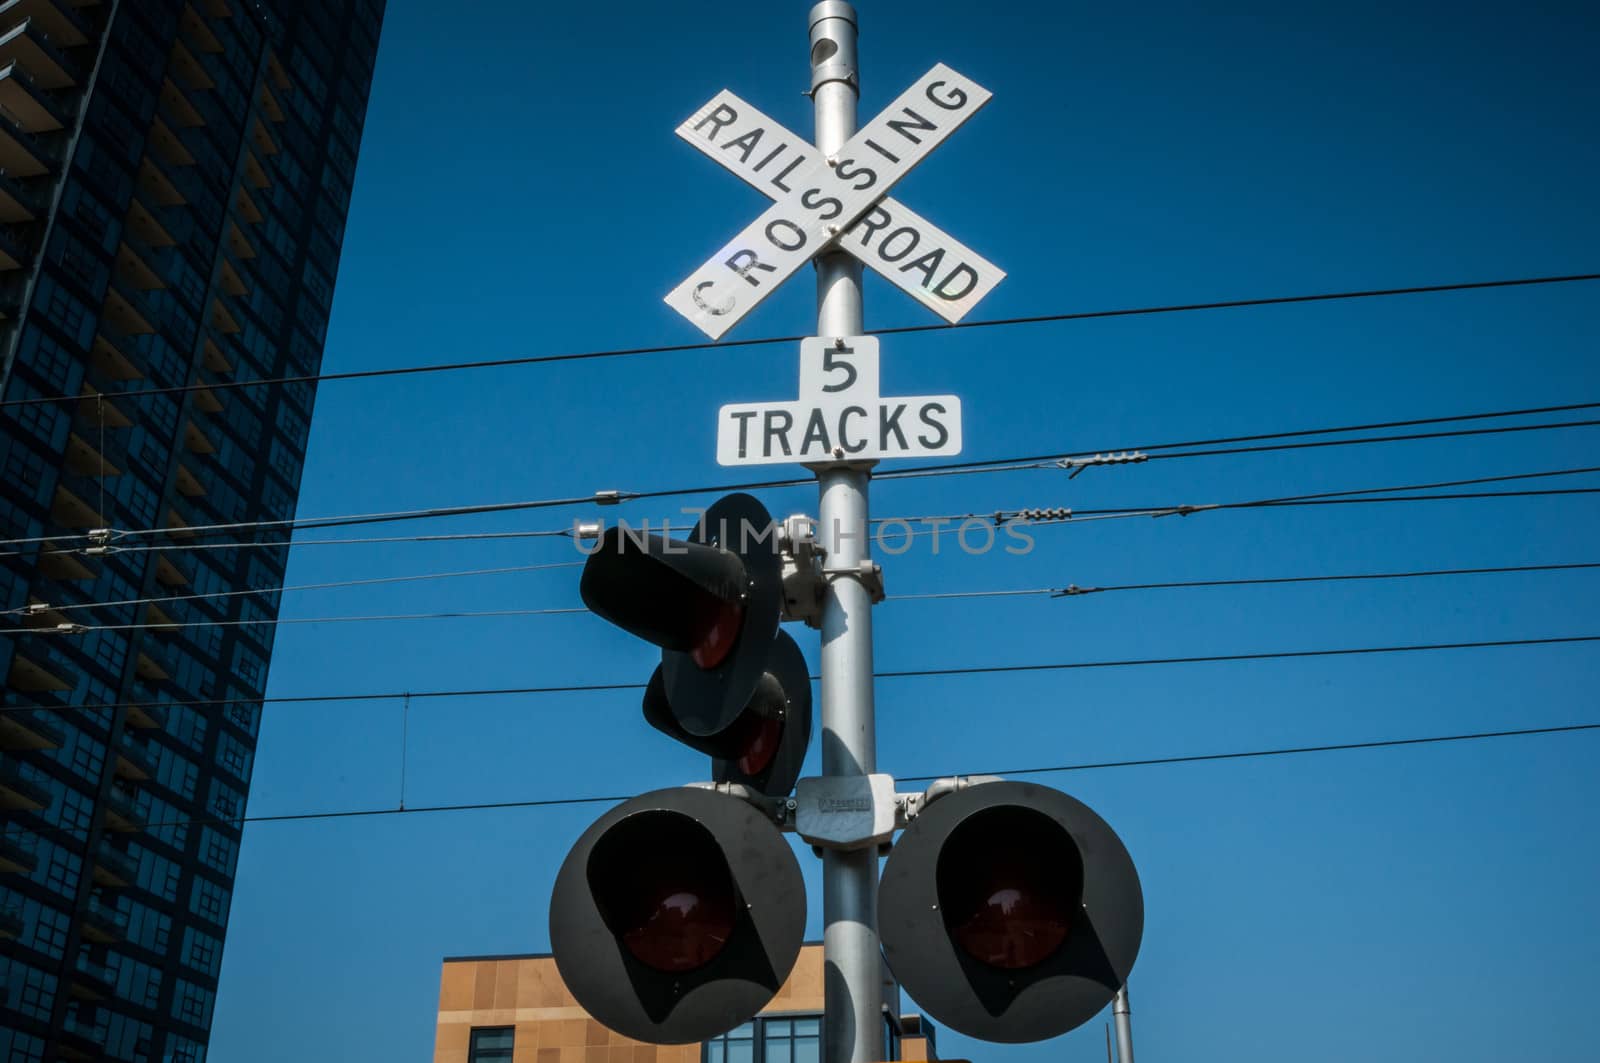 San Diego railroad crossing sign by weltreisendertj